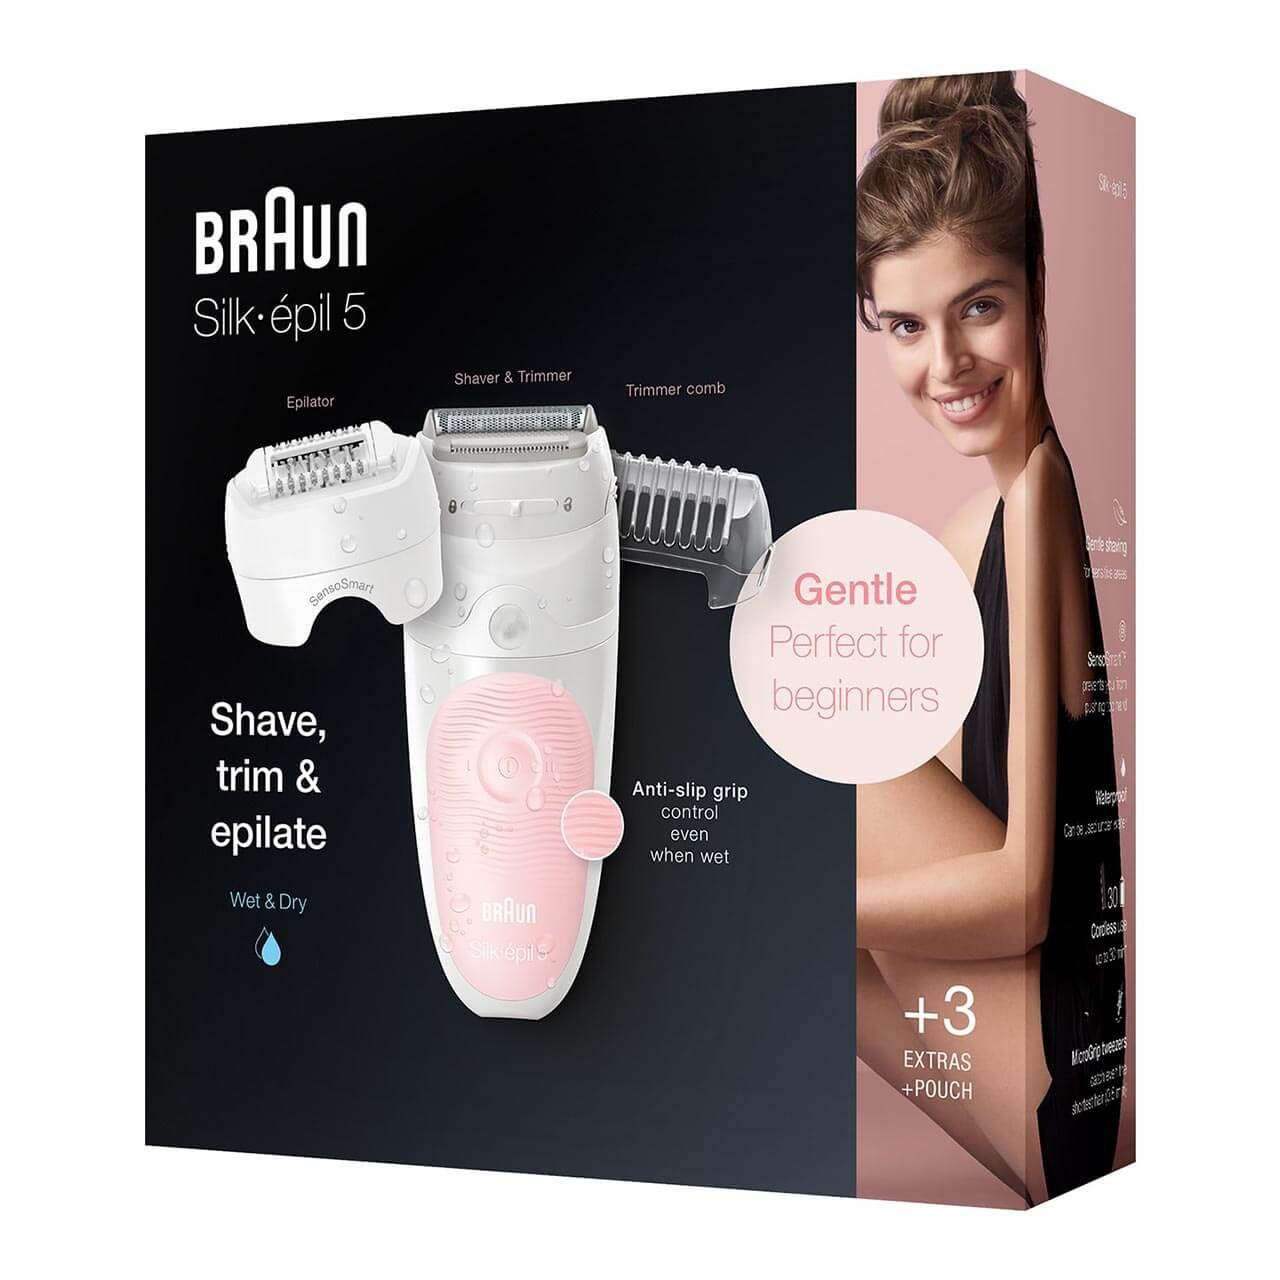 Braun SES 5820,Braun - Silk epil SES 5820 Wet & Dry Epilator + 4 Extras  incl. Bikini Styler & Pouch, White/Pink